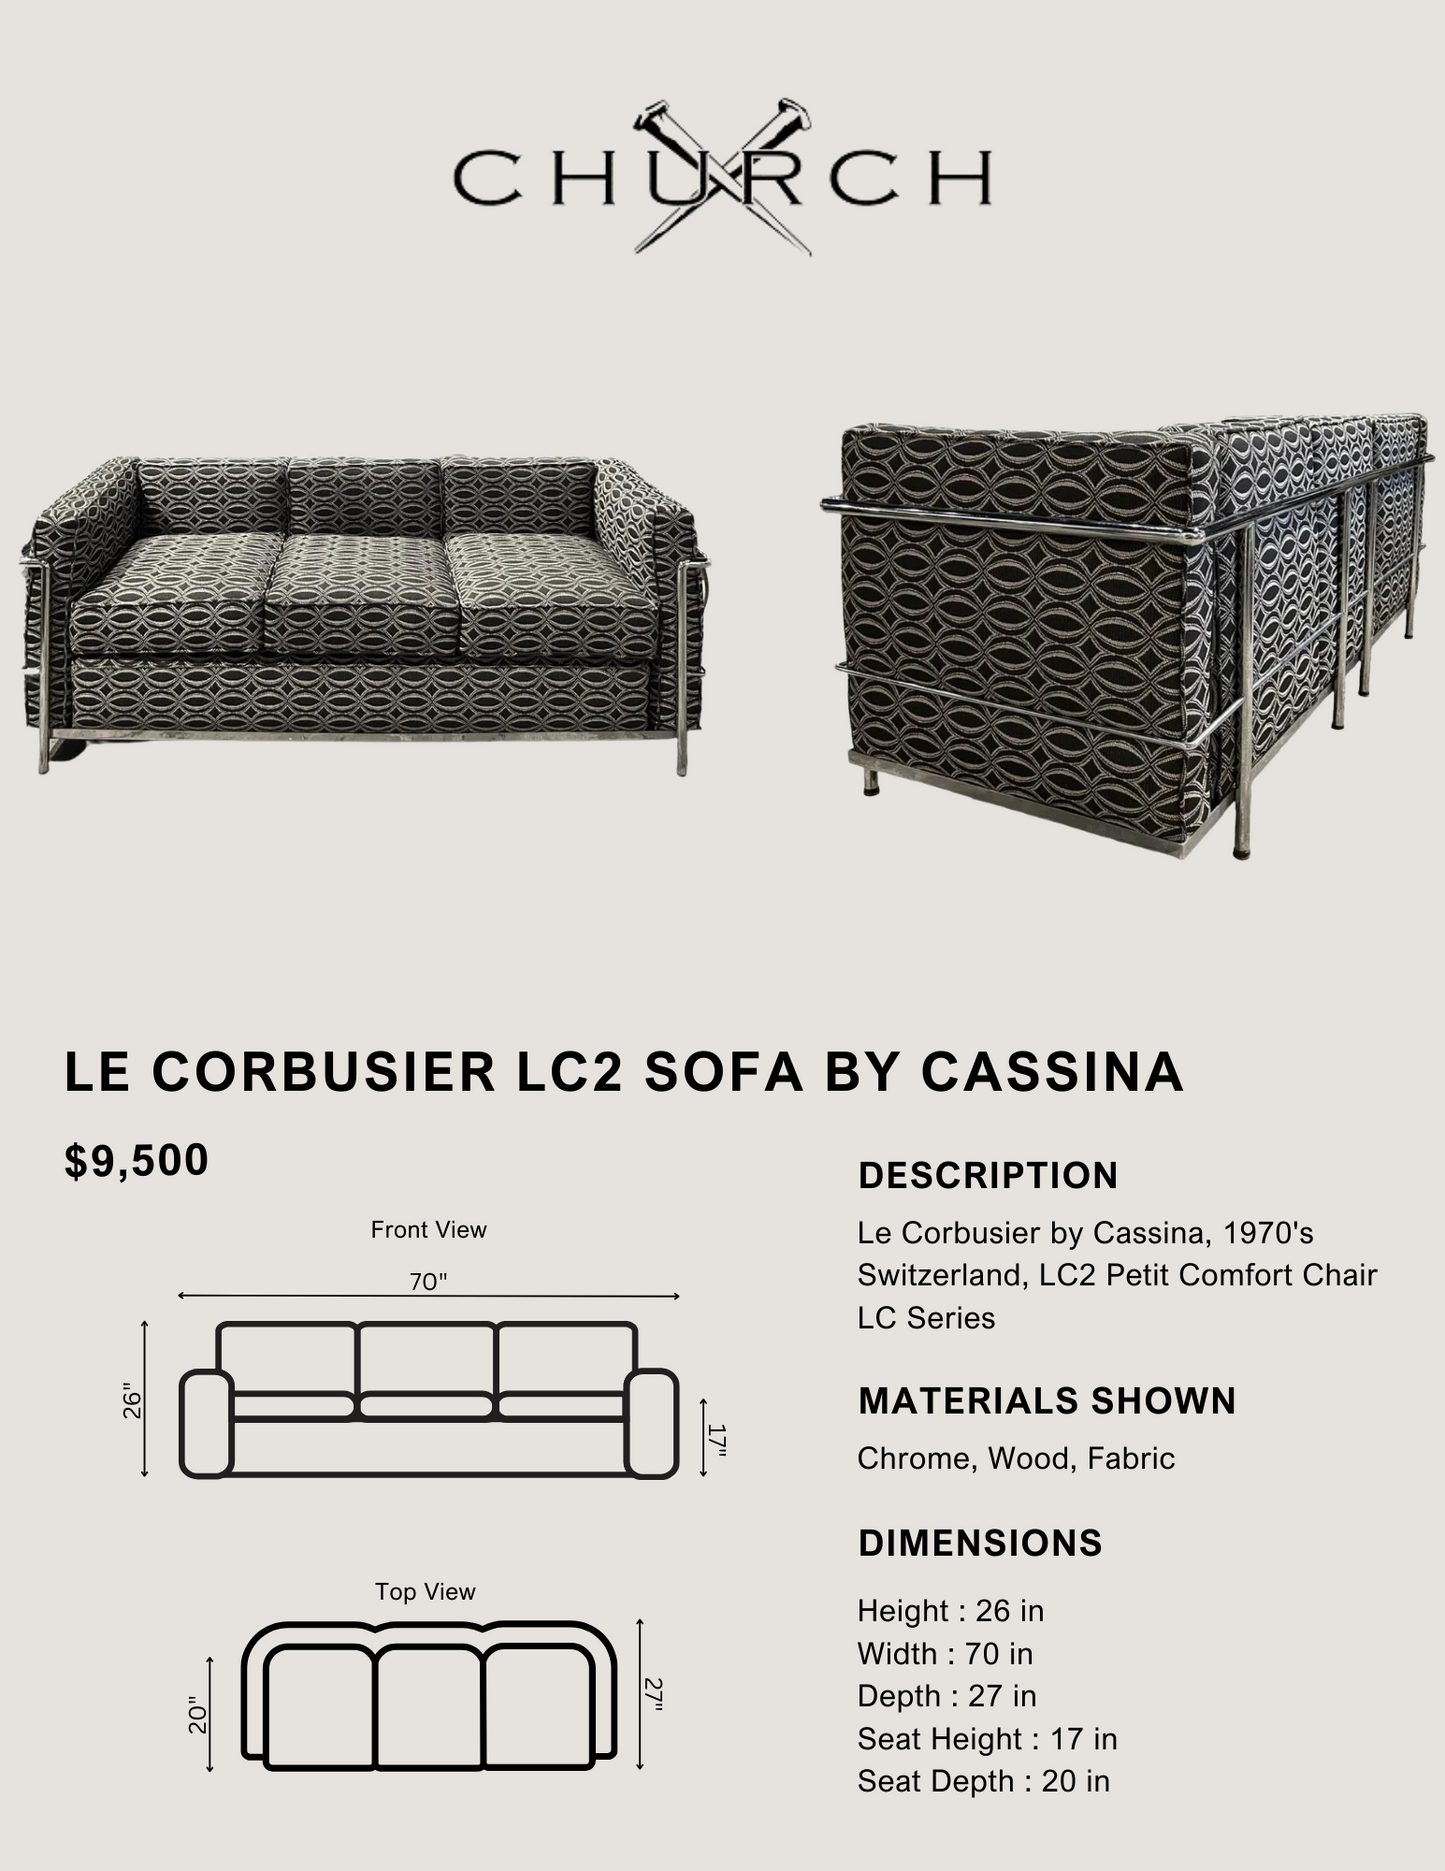 Le Corbusier LC2 3-Seater Sofa by Cassina